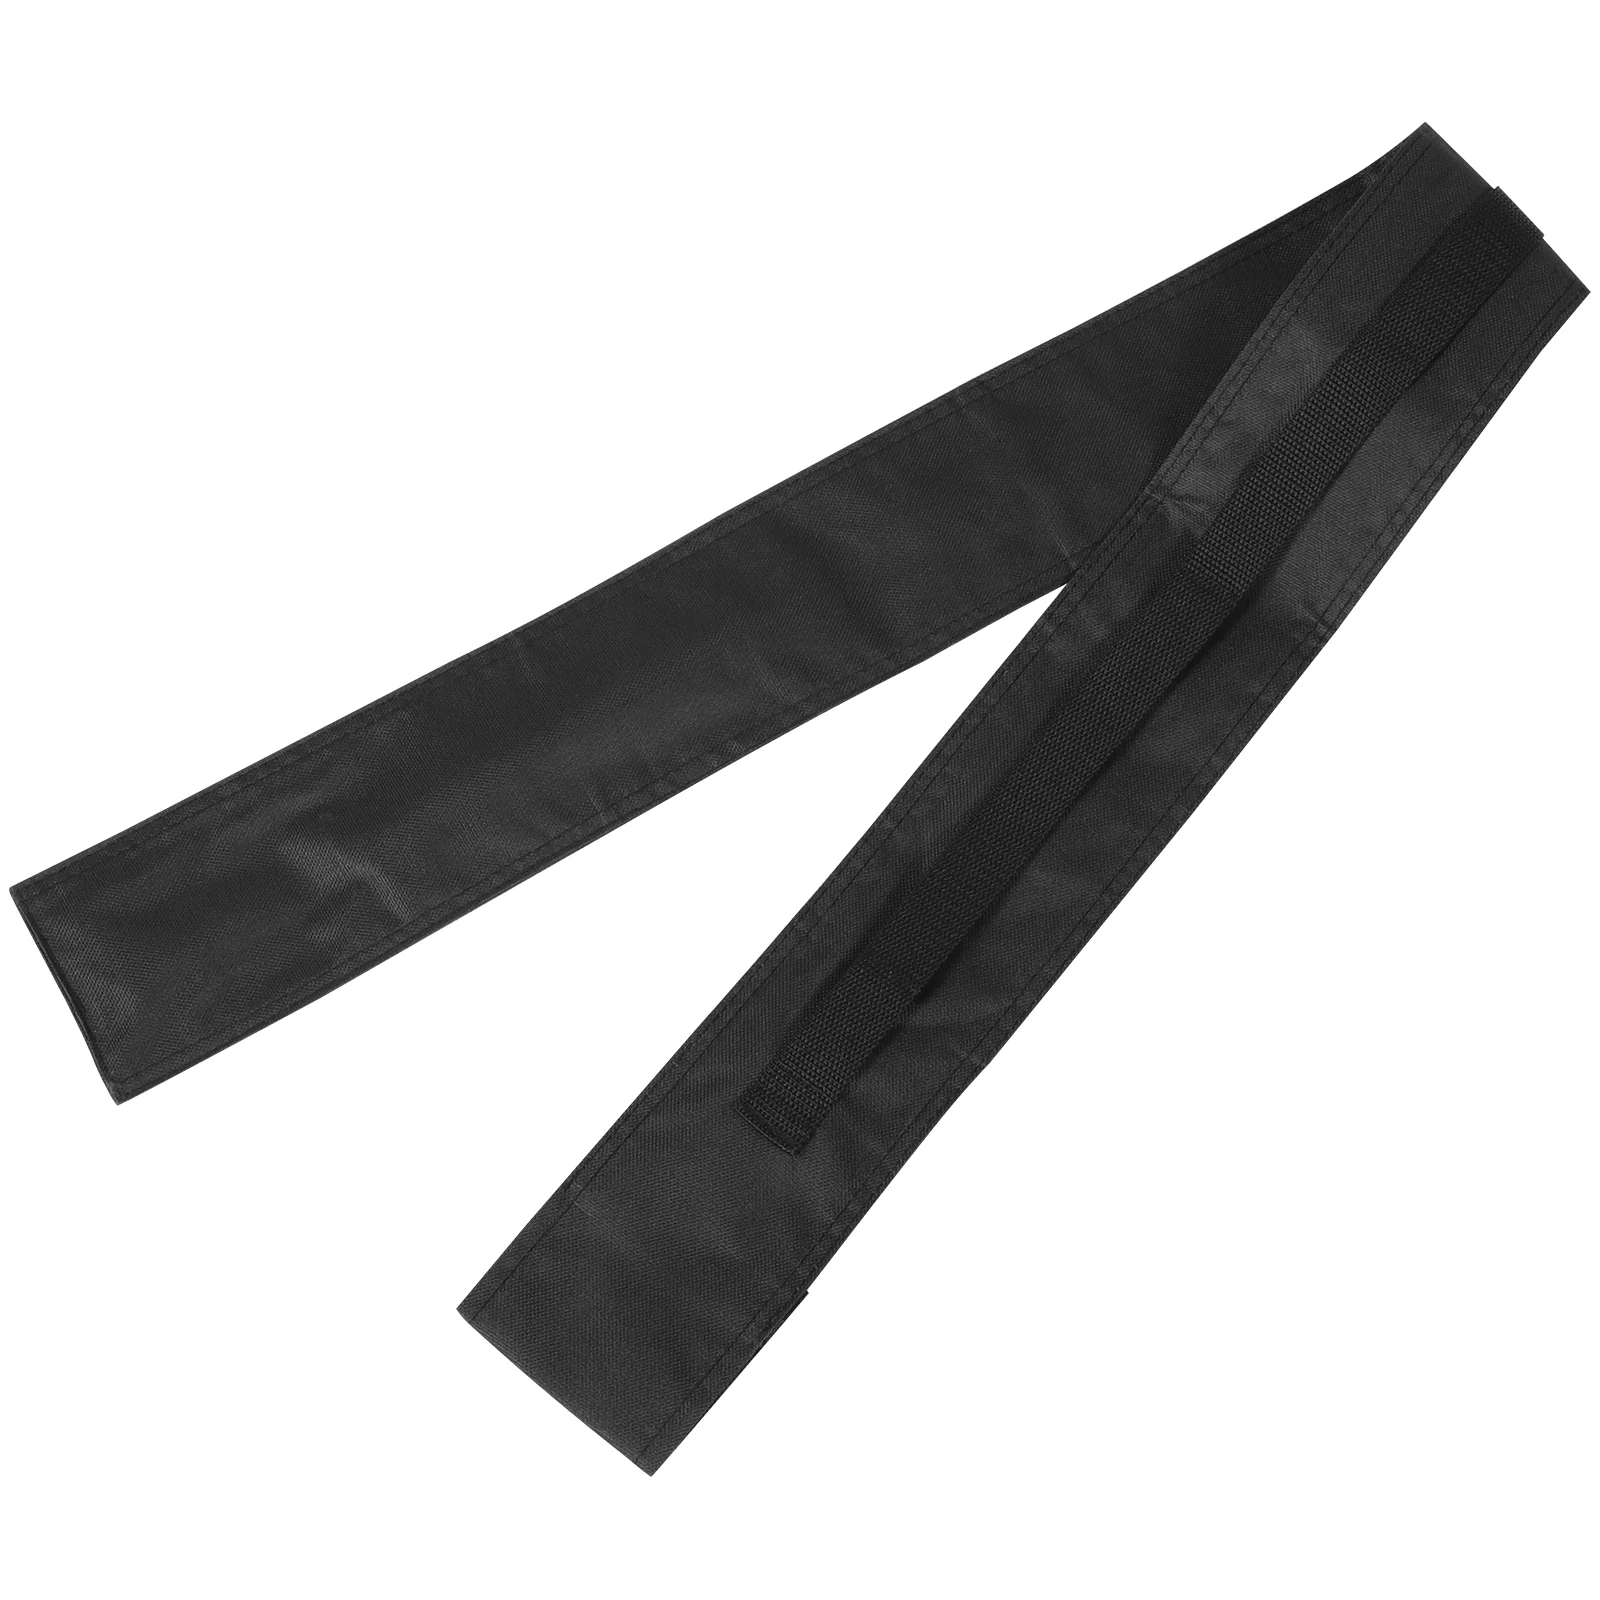 

Bling Accessories Pool Cue Bag Reusable Pouch 120x9cm Billiard Organizer Protective Cover Black Nylon Wear-resist